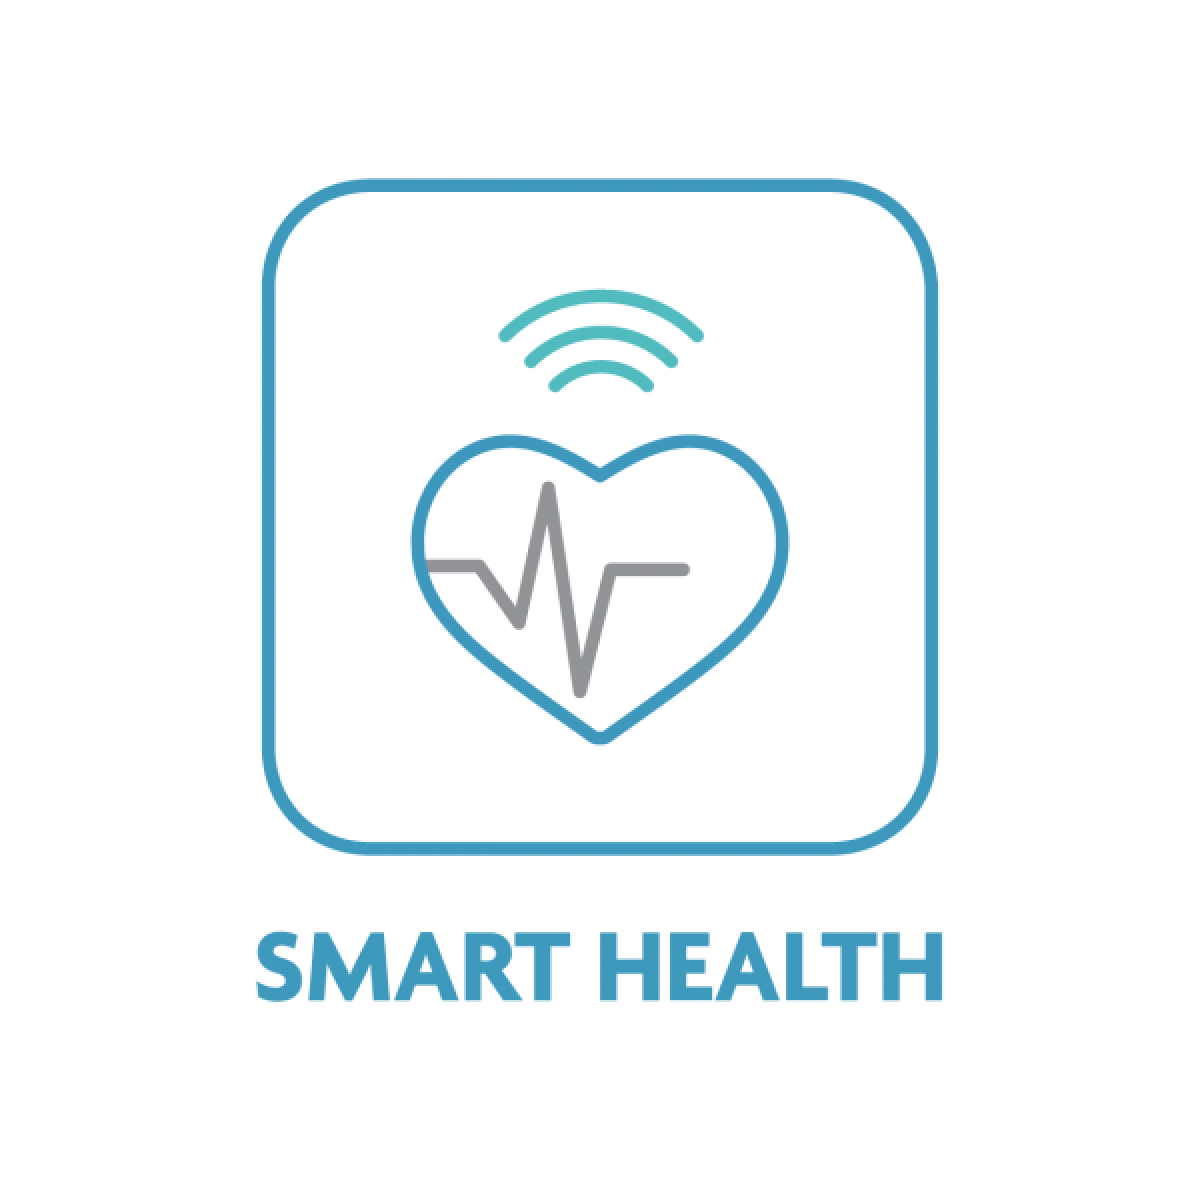 Smart health logo